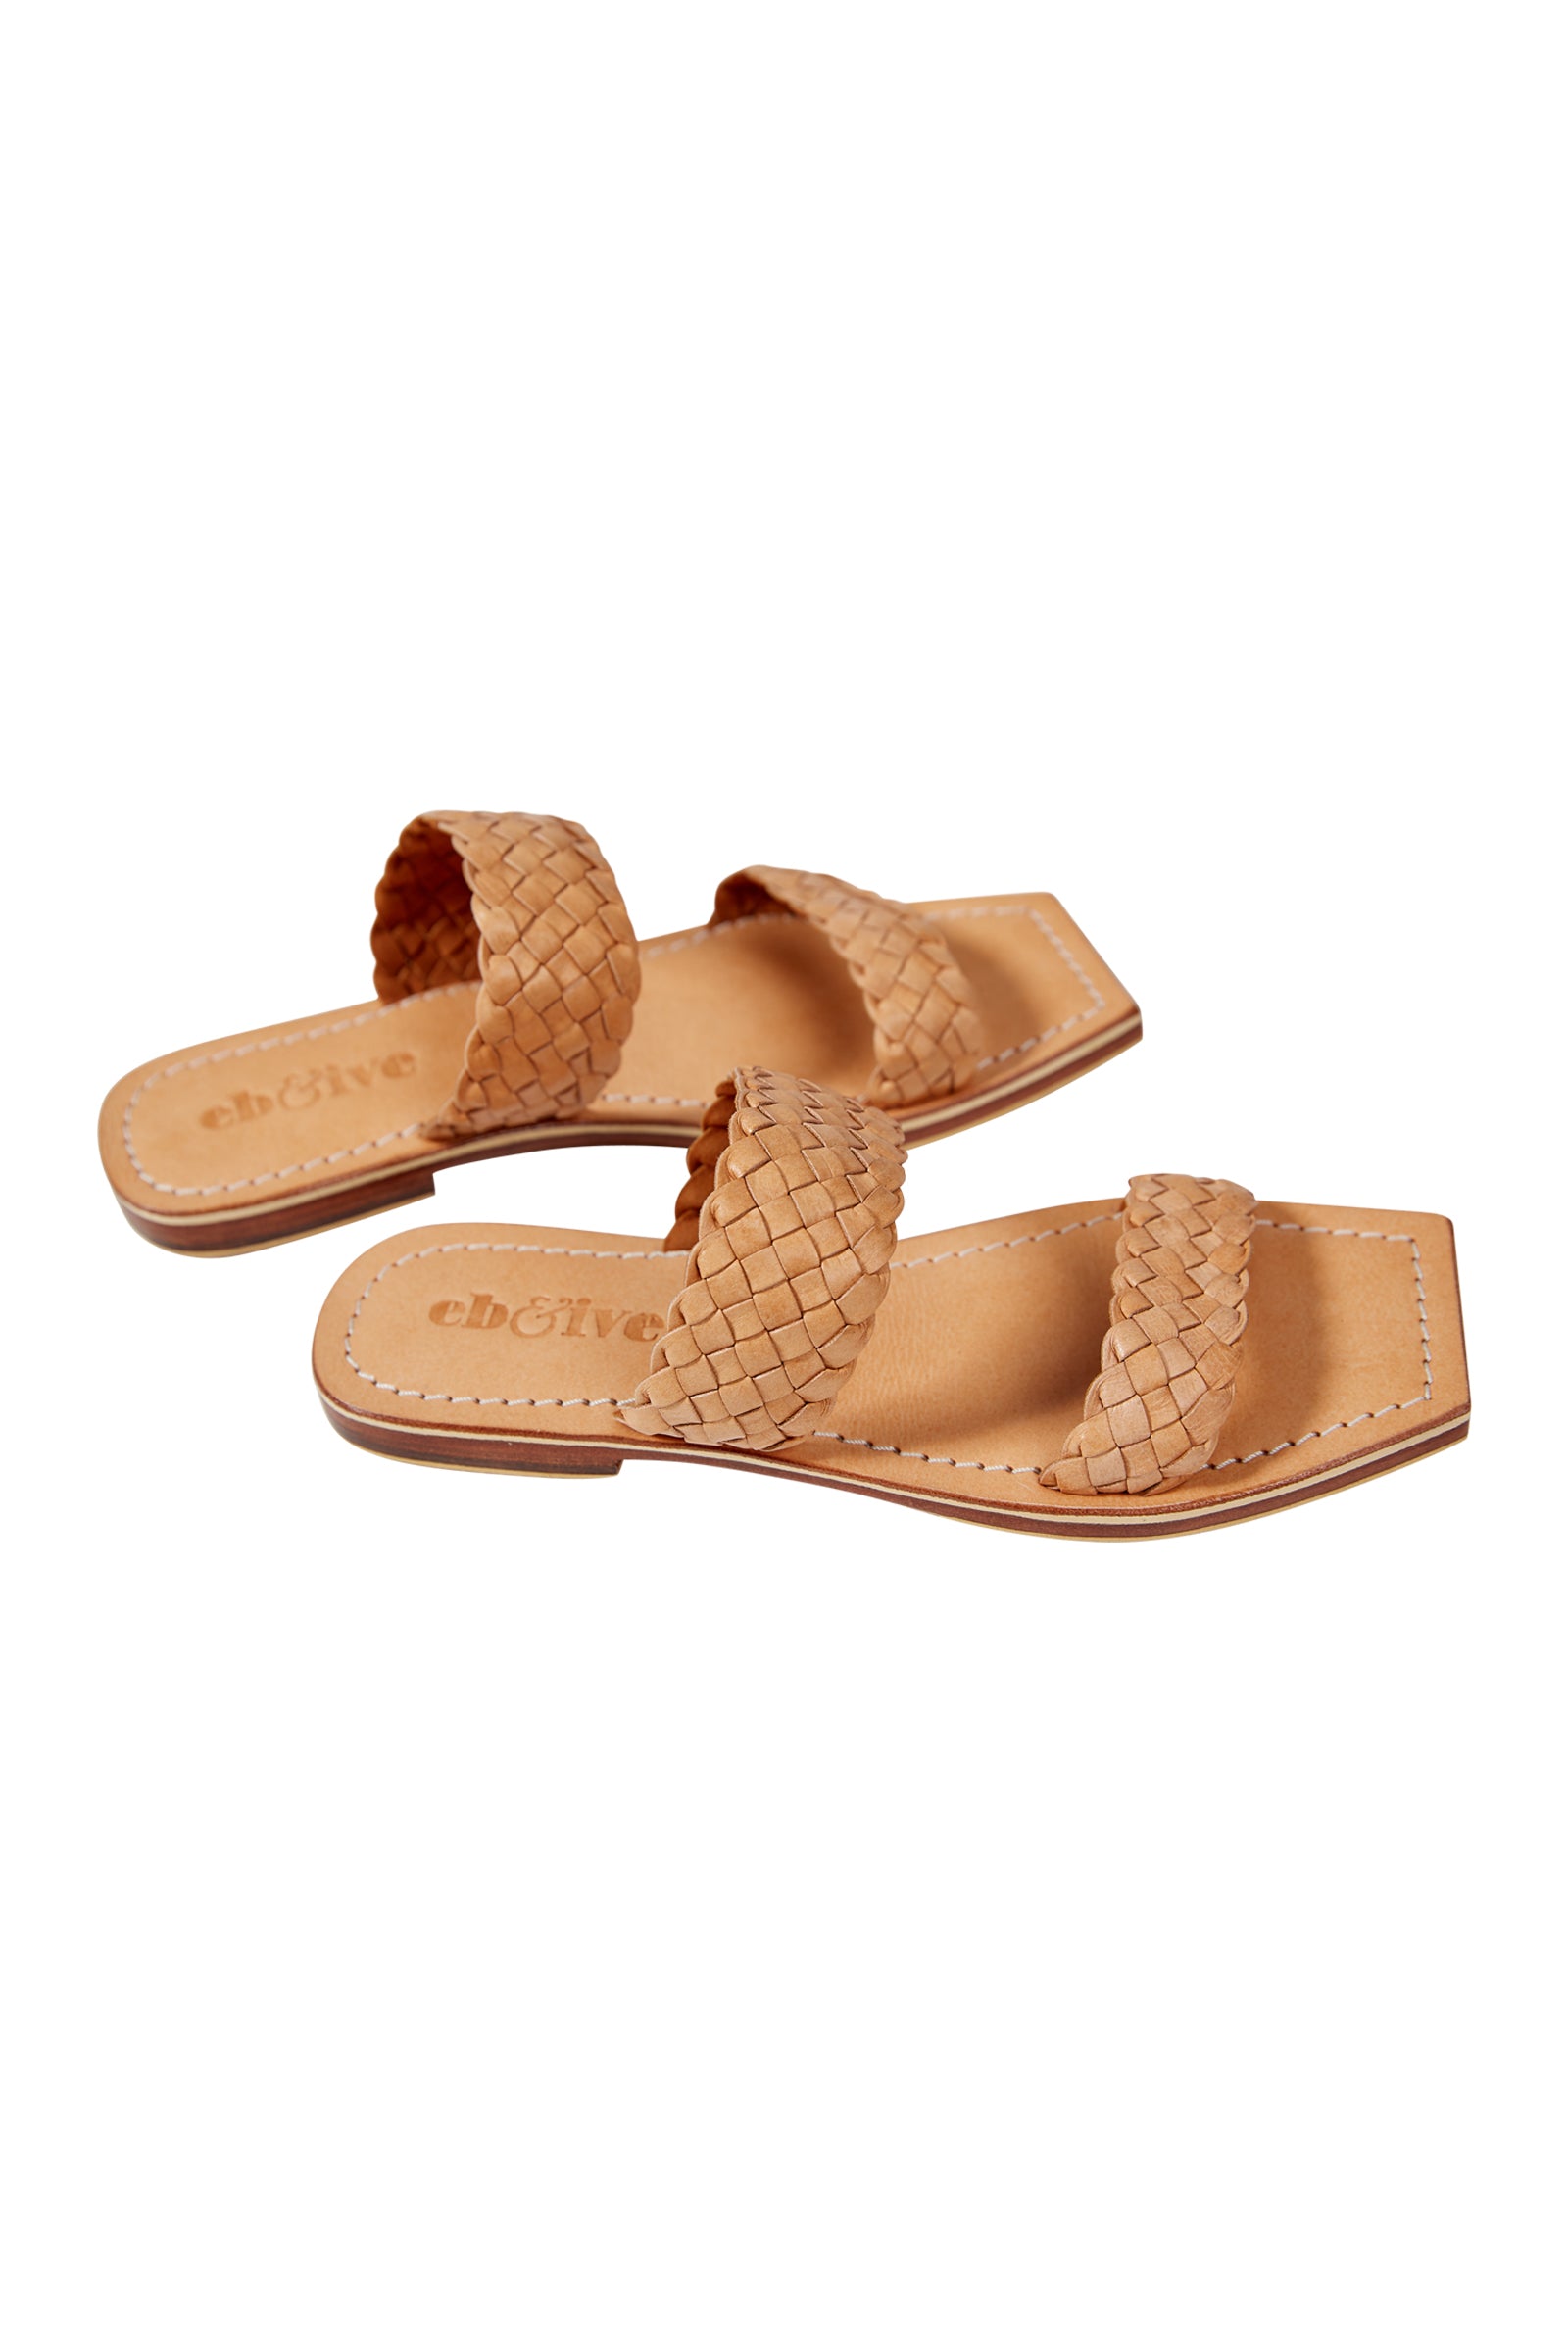 La Vie Sandal - Tan - eb&ive Footwear - Sandals